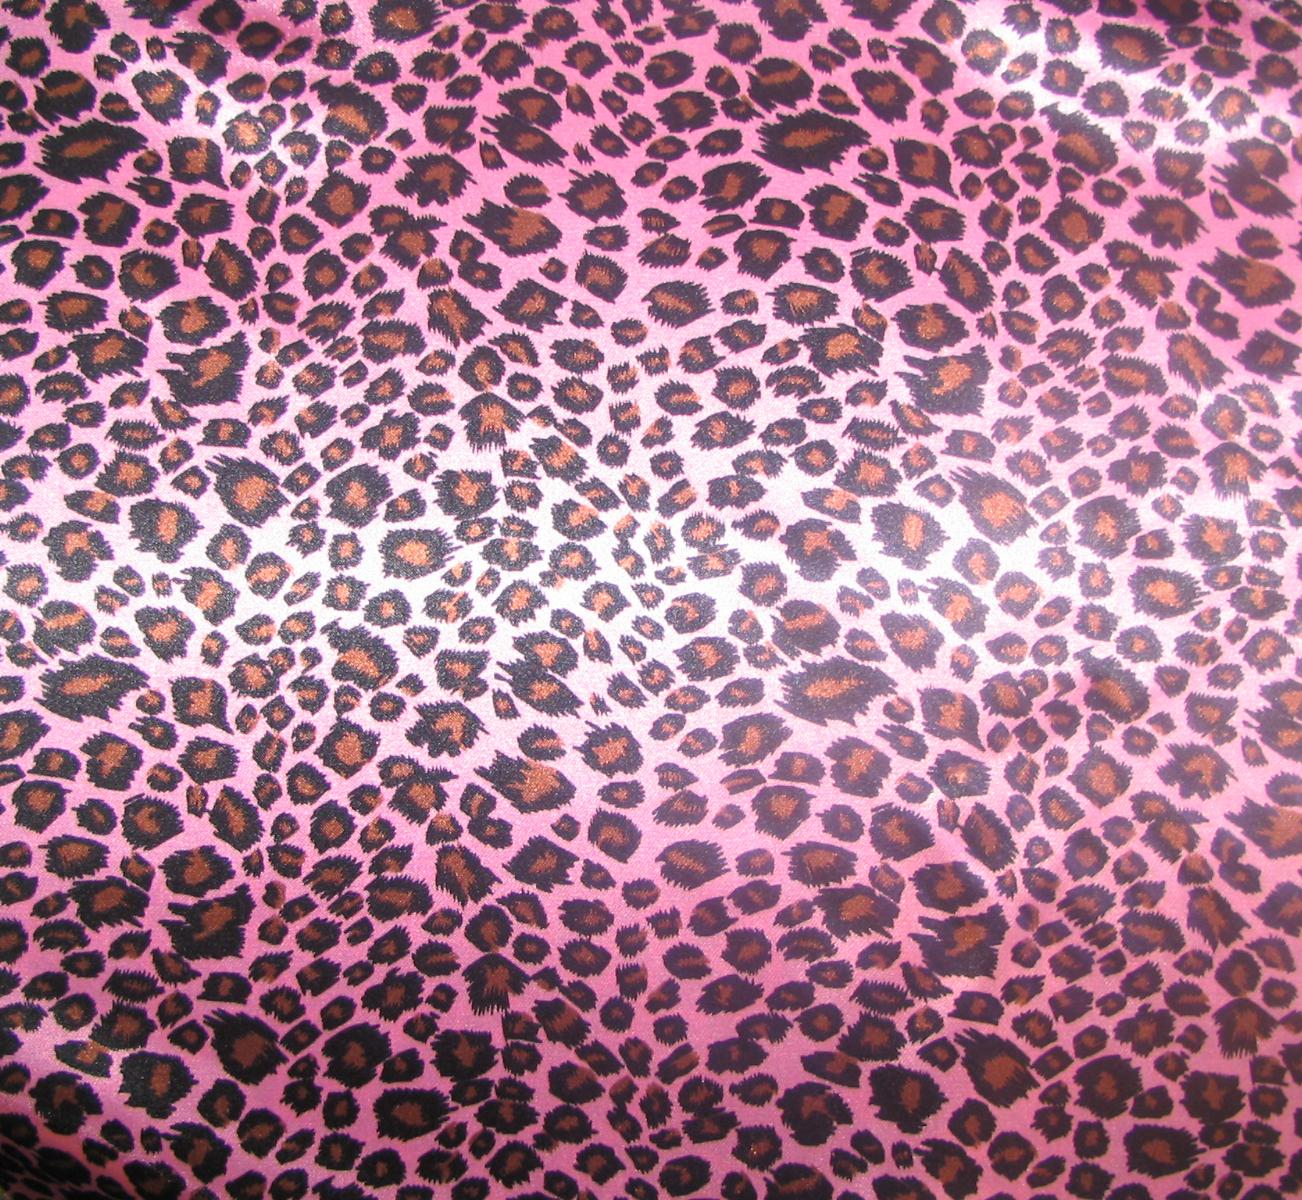 Related Pictures Leopard Print Wallpaper For Desktop